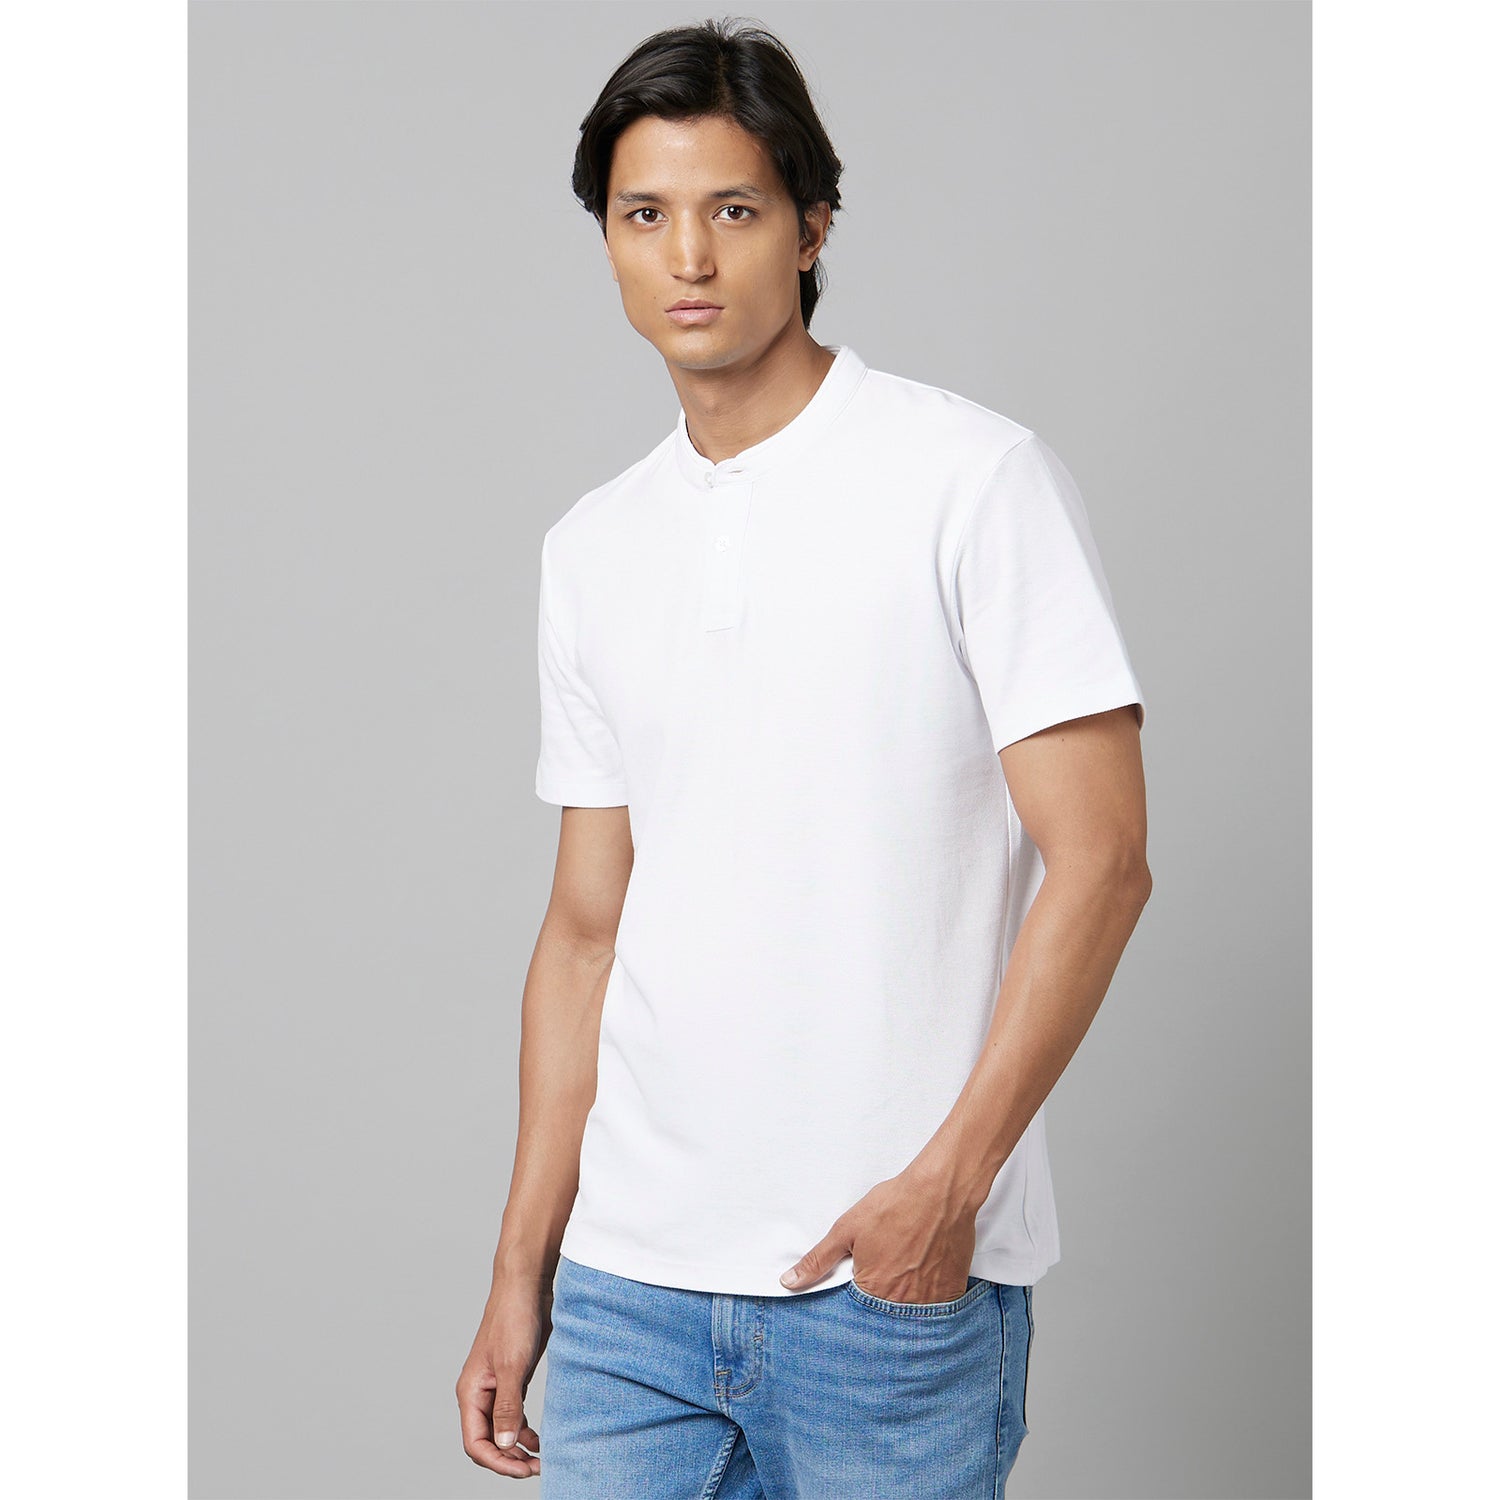 White Solid Short Sleeves Henley Neck Tshirts (DESOHEL)